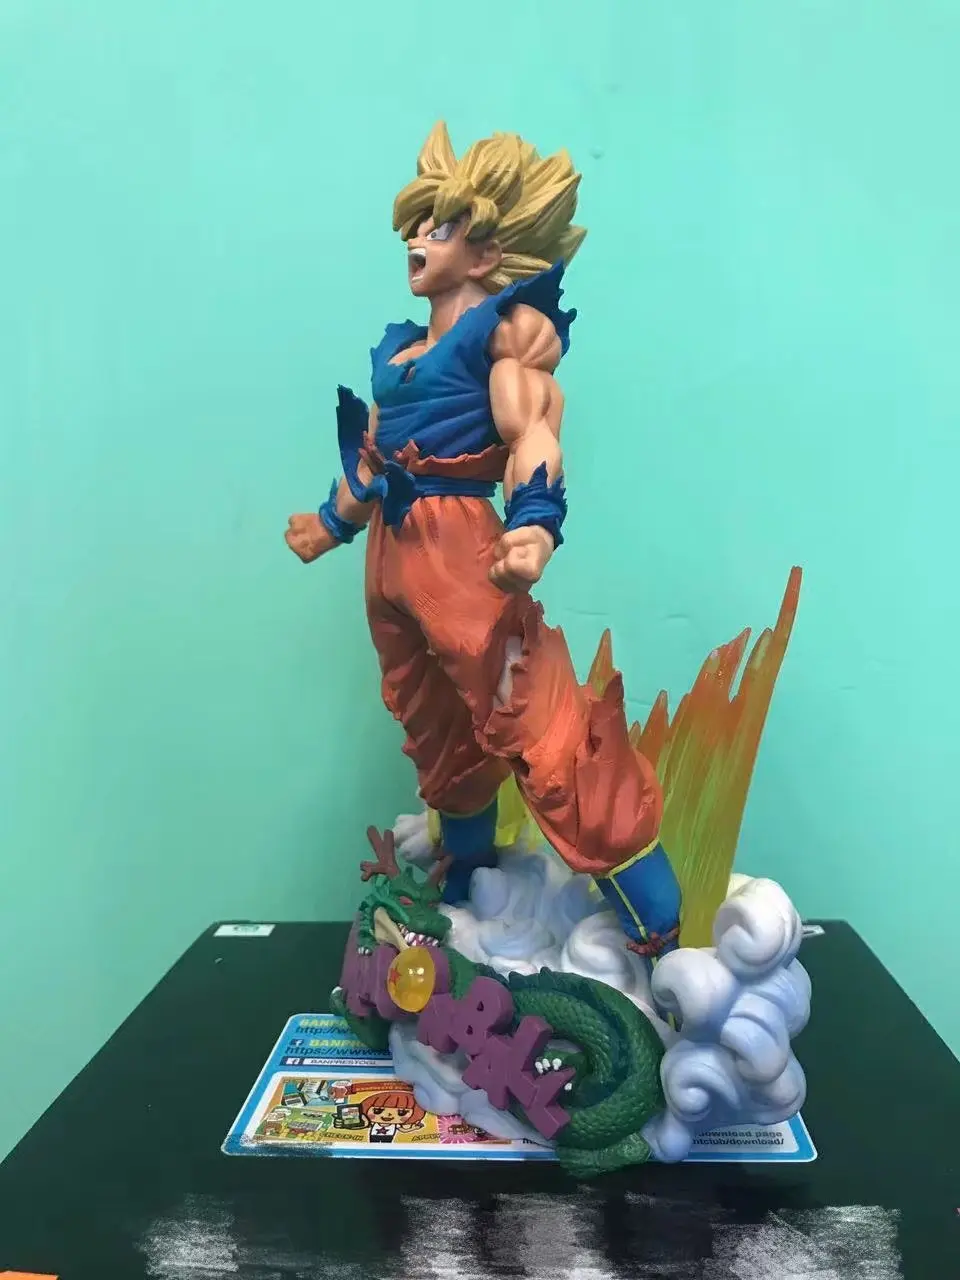 24 см Dragon Ball Z Super Saiyan Son Goku Аниме Фигурка DBZ Super Master Stars Diorama SMSD фигурка Коллекционная модель игрушки